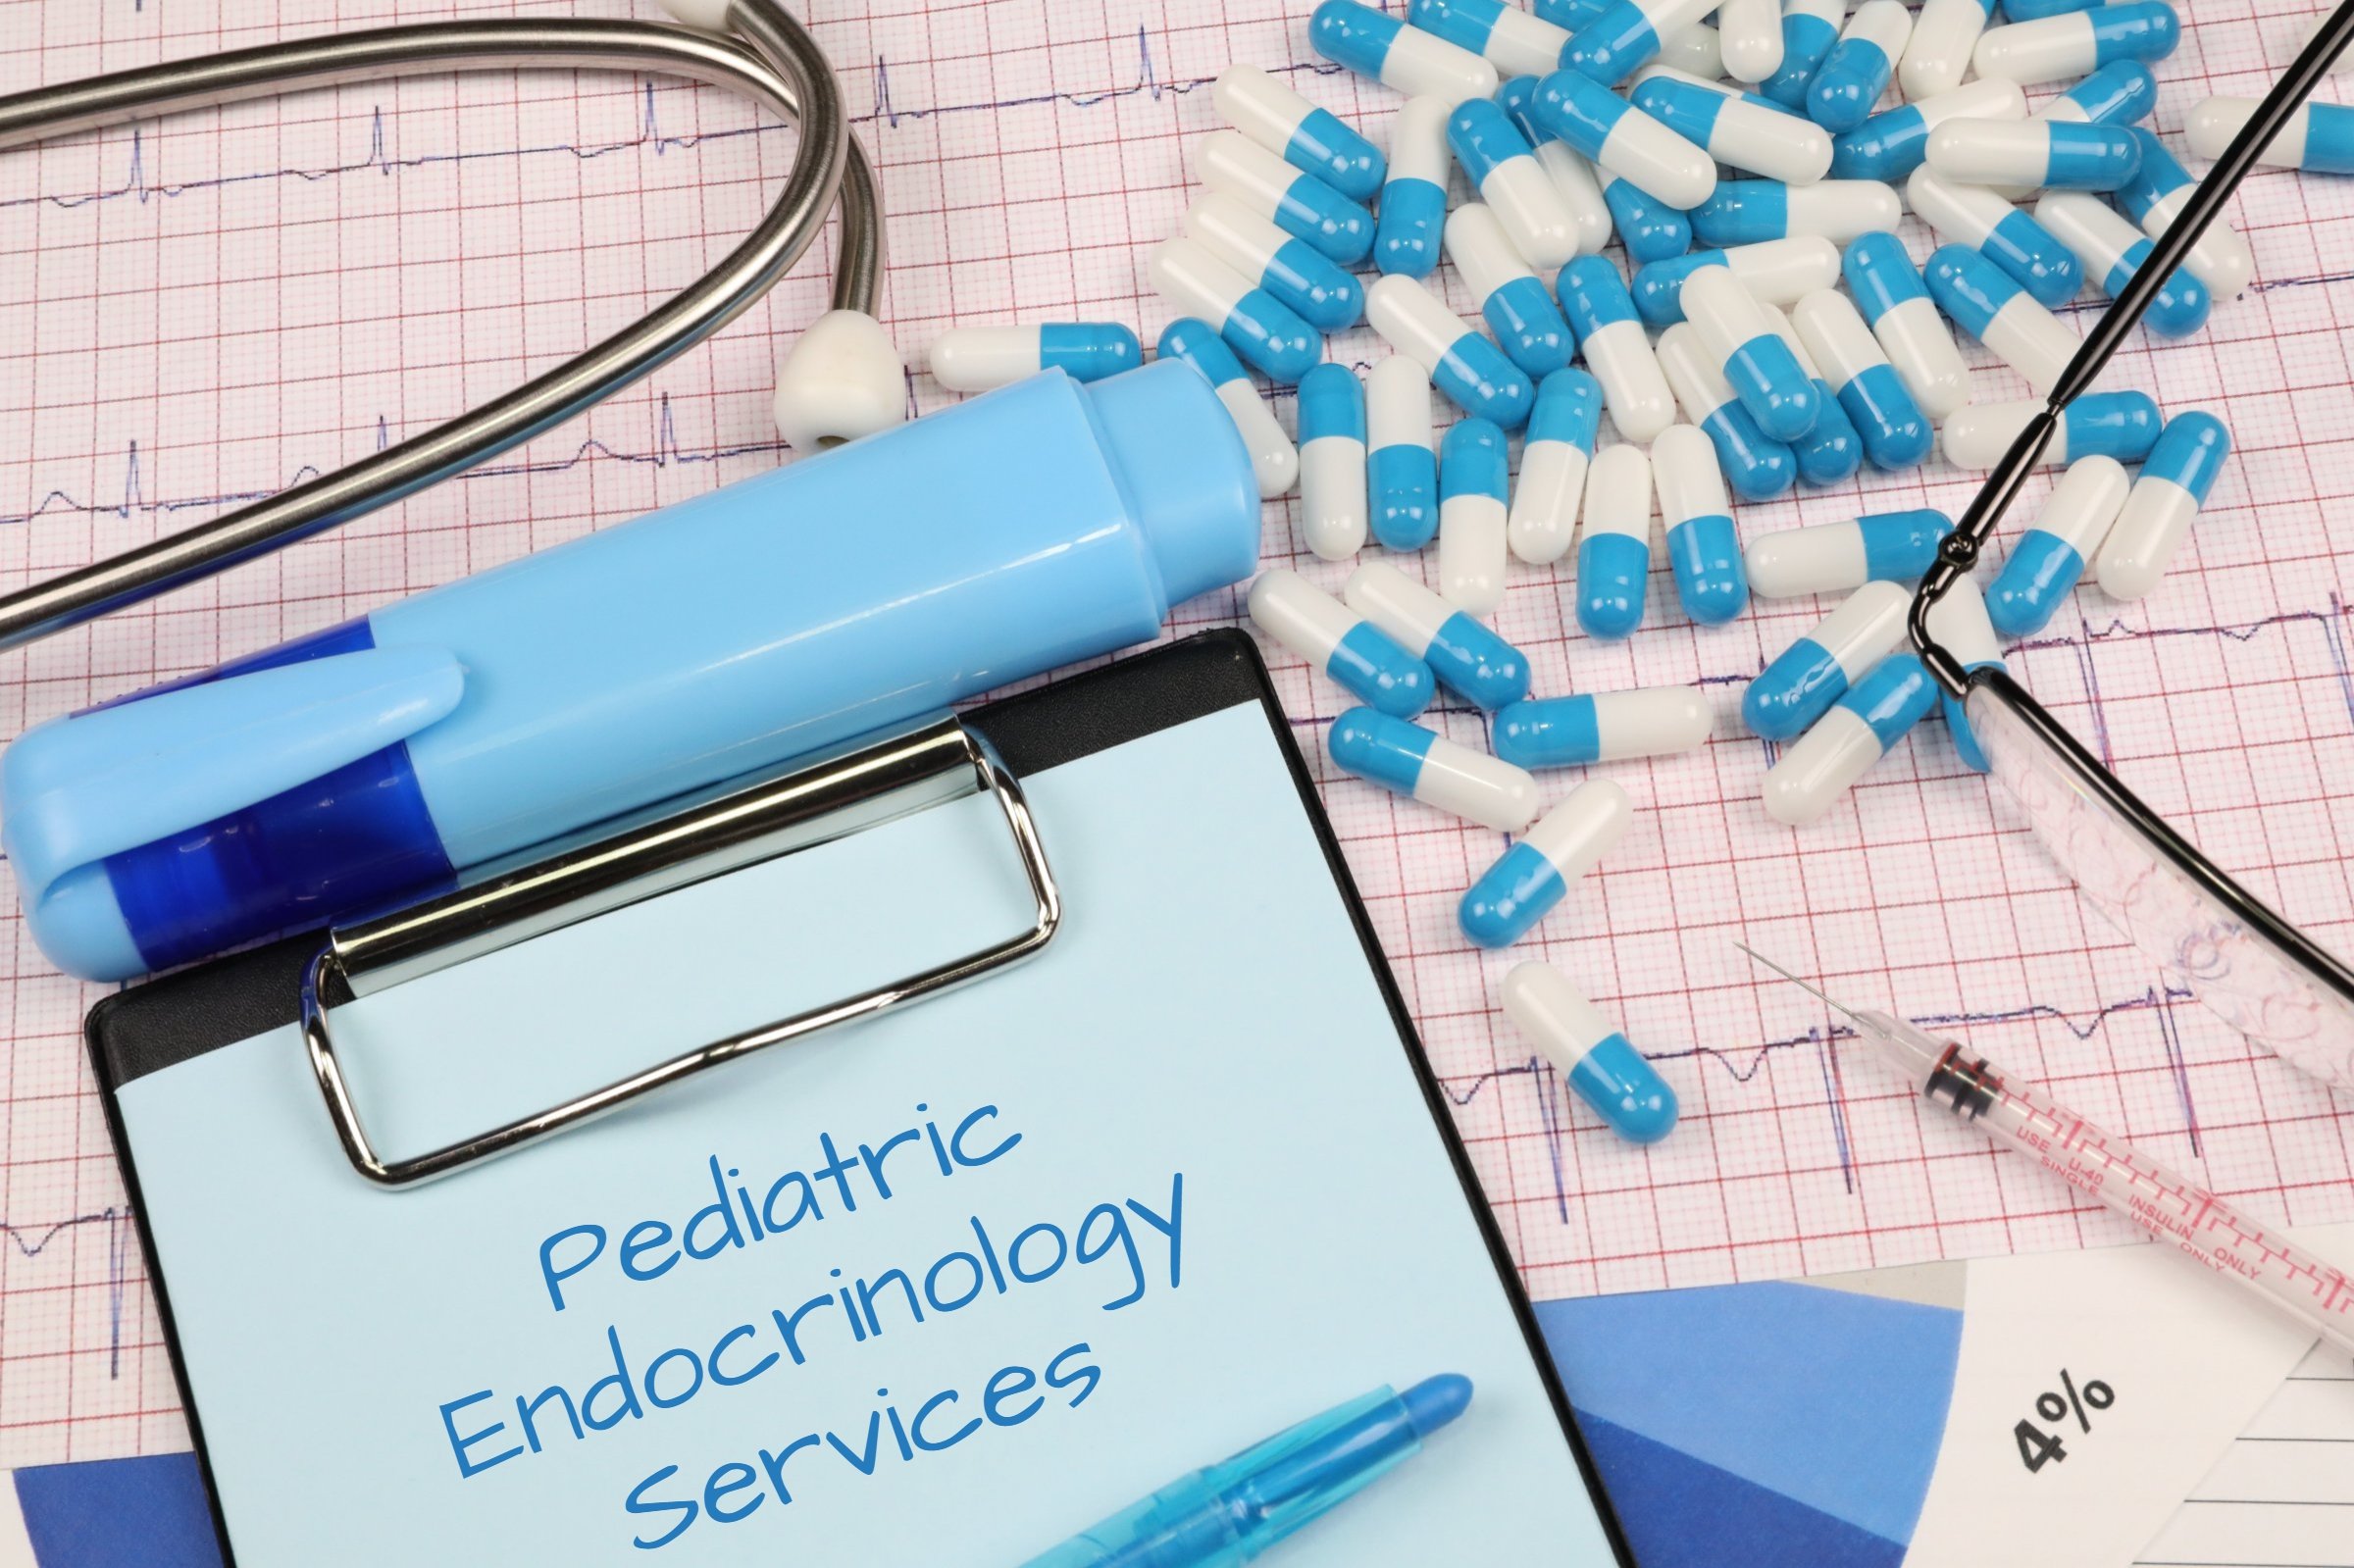 pediatric endocrinology services